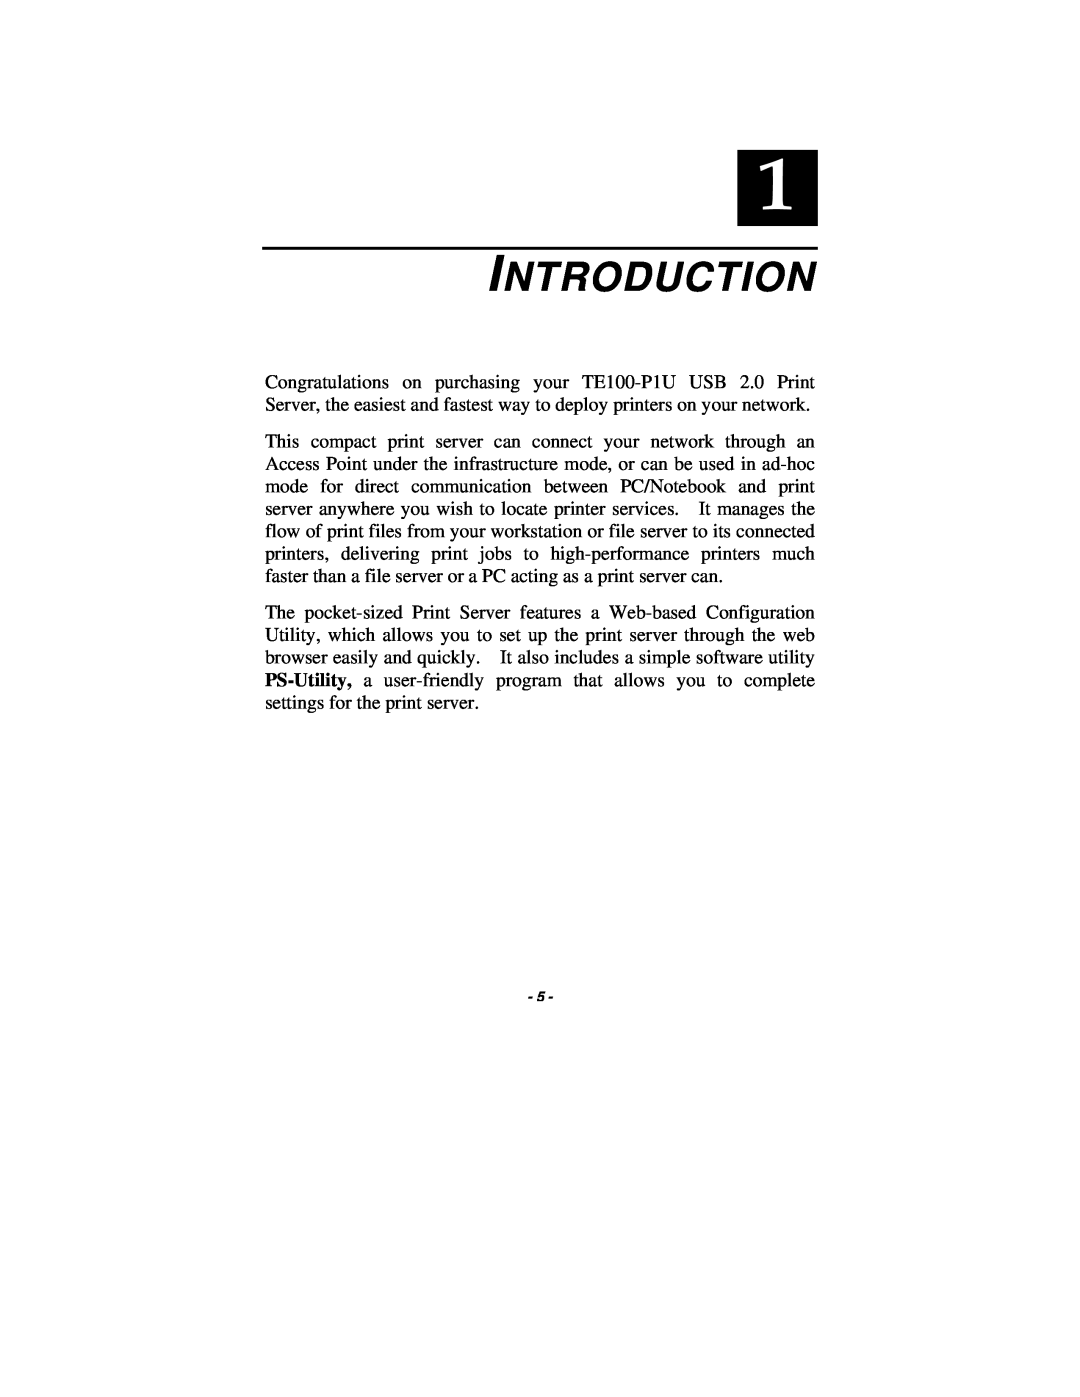 TRENDnet TE100-P1U manual Introduction 